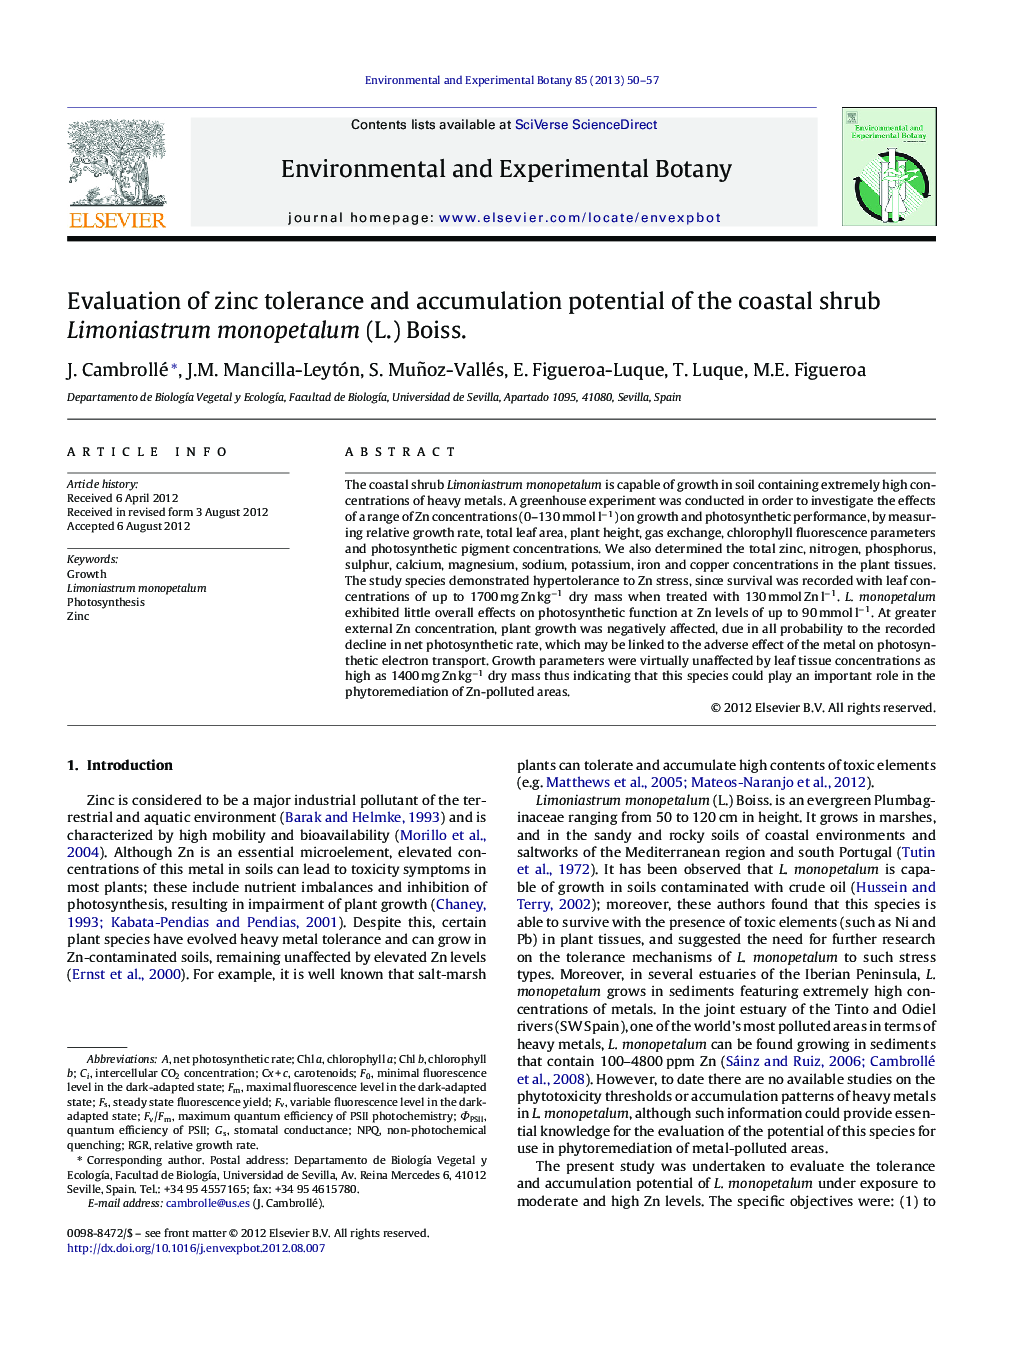 Evaluation of zinc tolerance and accumulation potential of the coastal shrub Limoniastrum monopetalum (L.) Boiss.